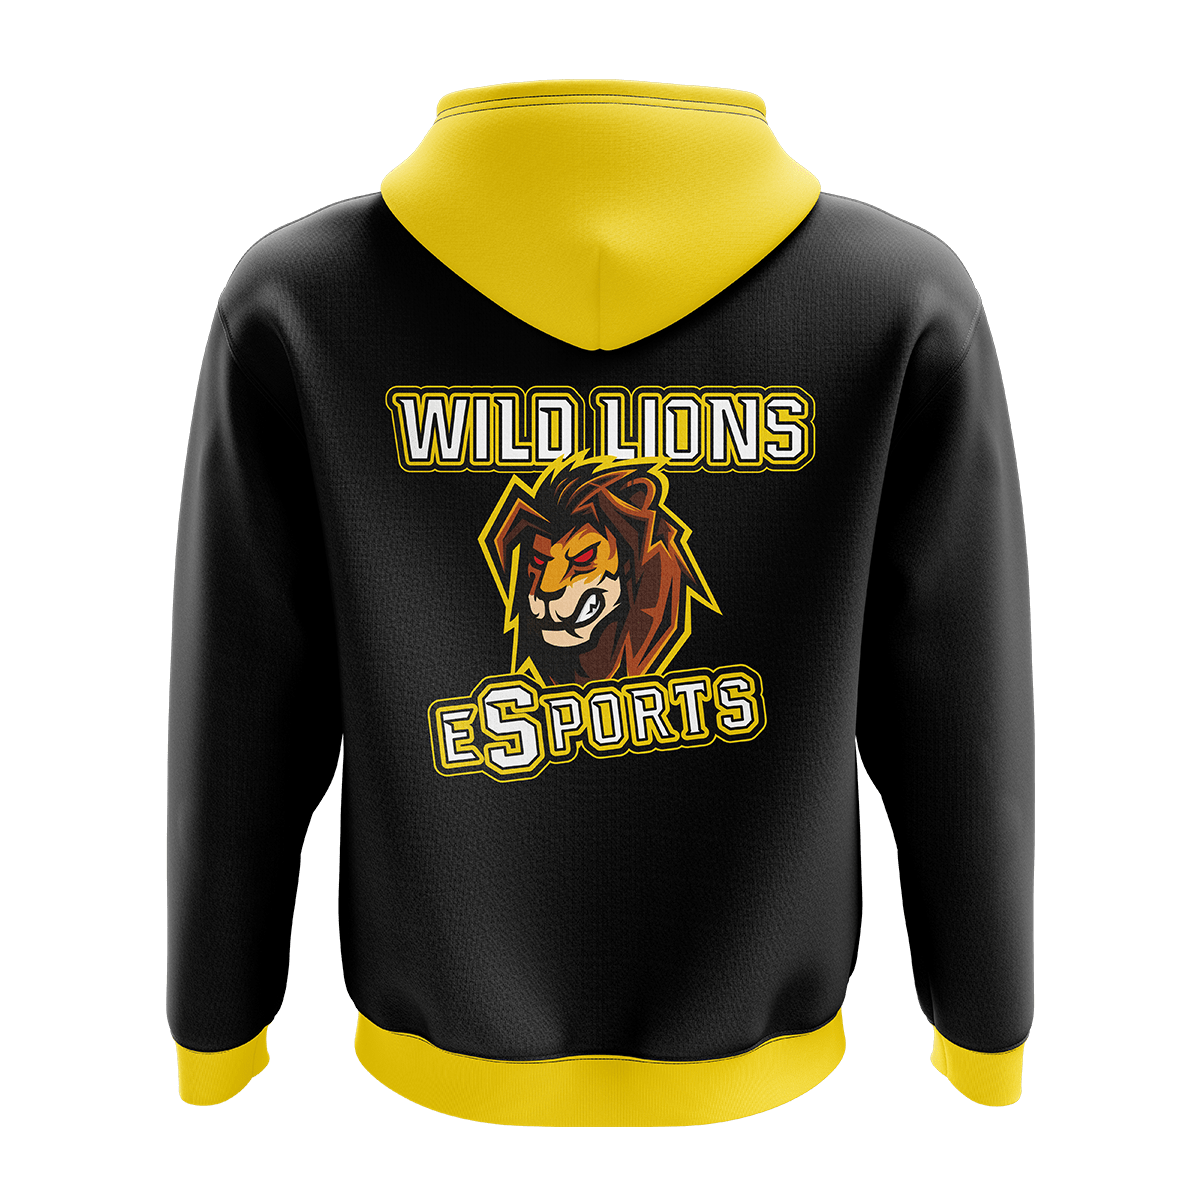 WILD LIONS ESPORTS  - Crew Zipper 2021